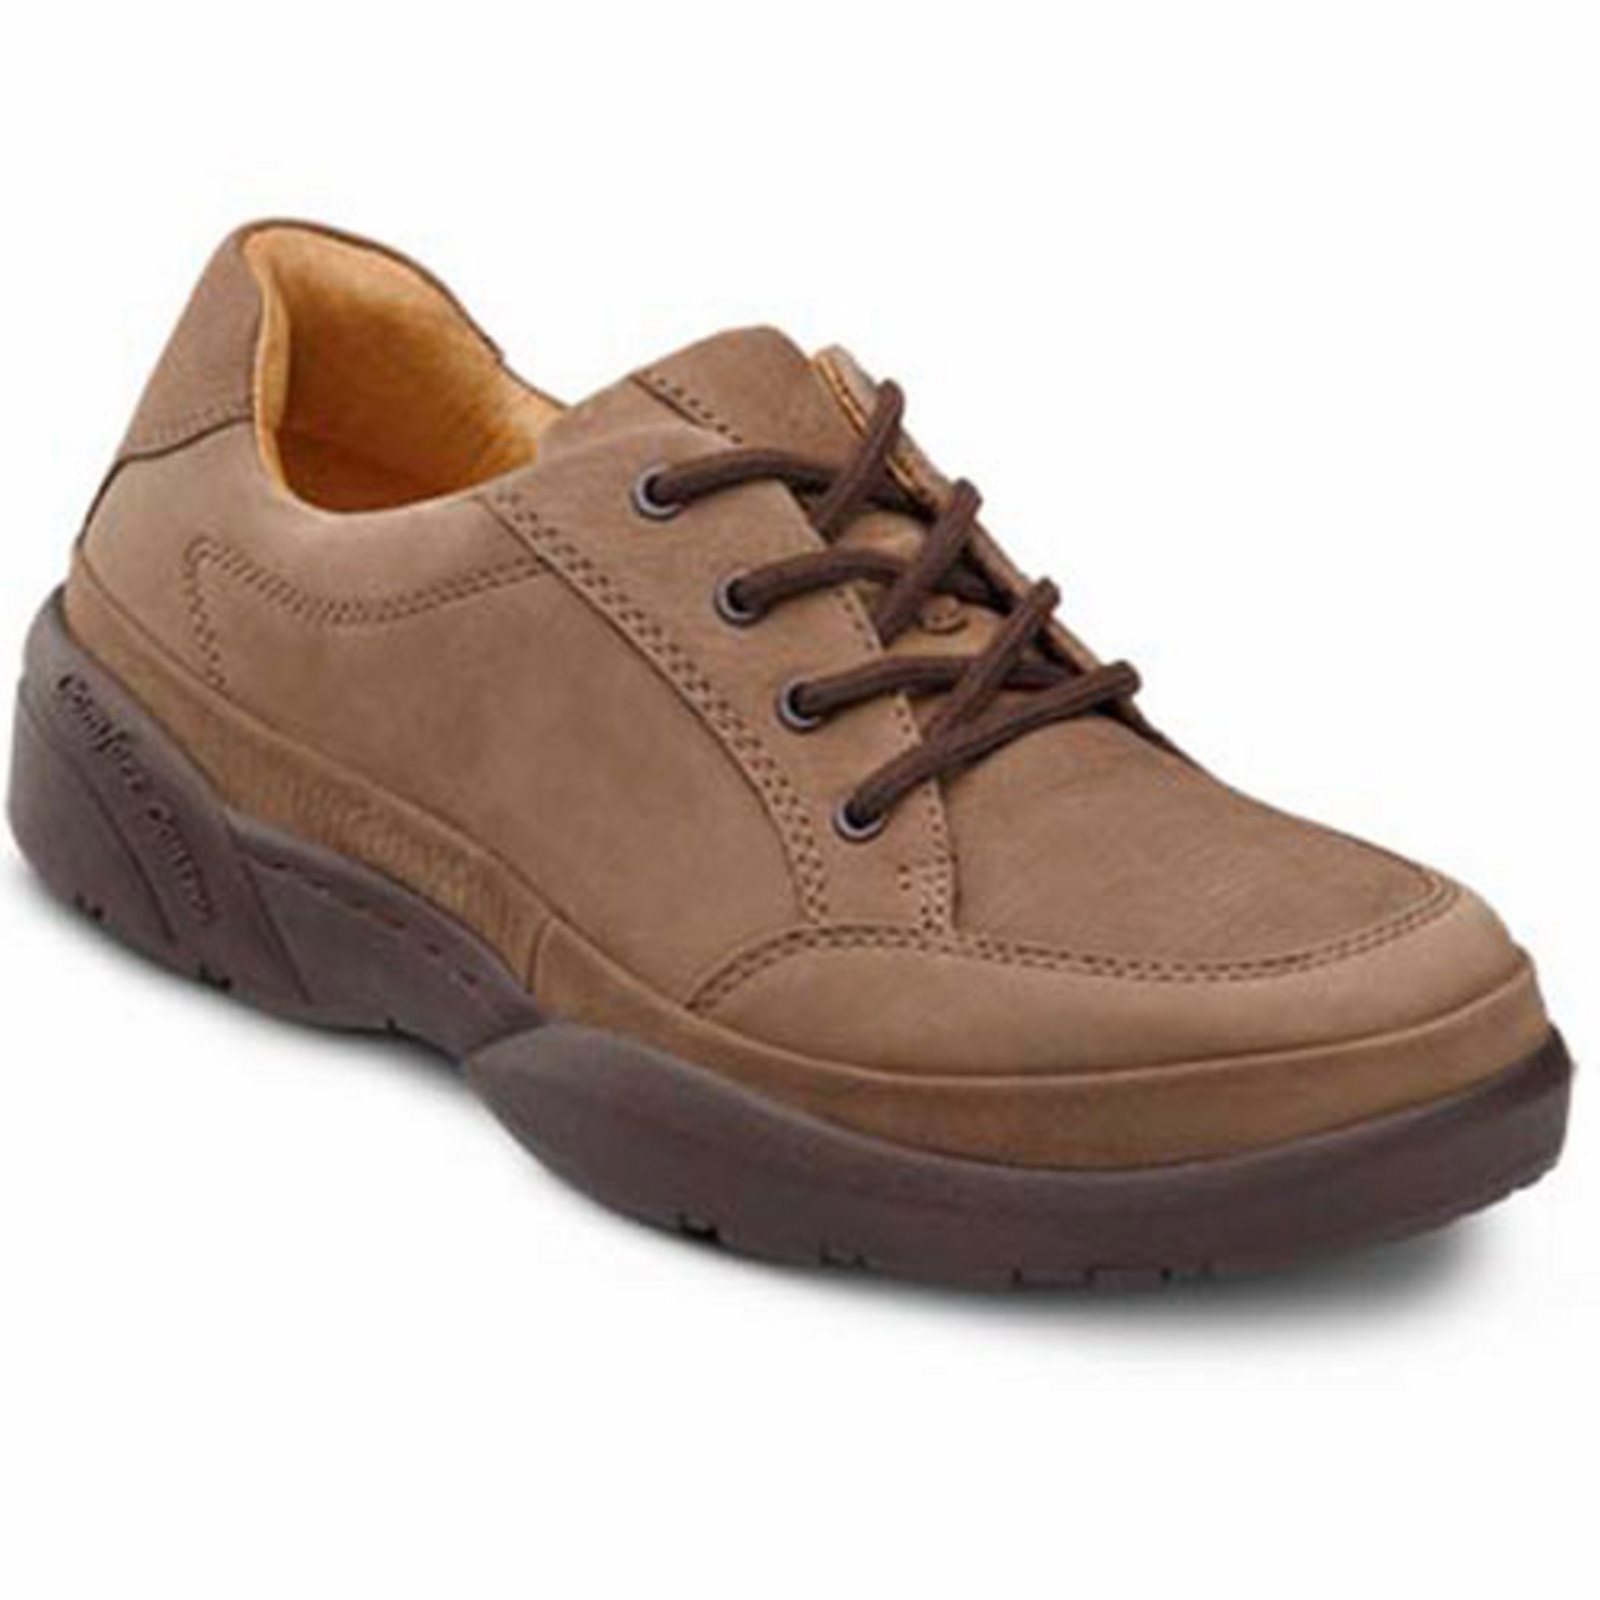 Dr. Comfort Justin Men's Casual Shoe: 8.5 Medium (B/D) Chestnut Suede Lace - image 1 of 4